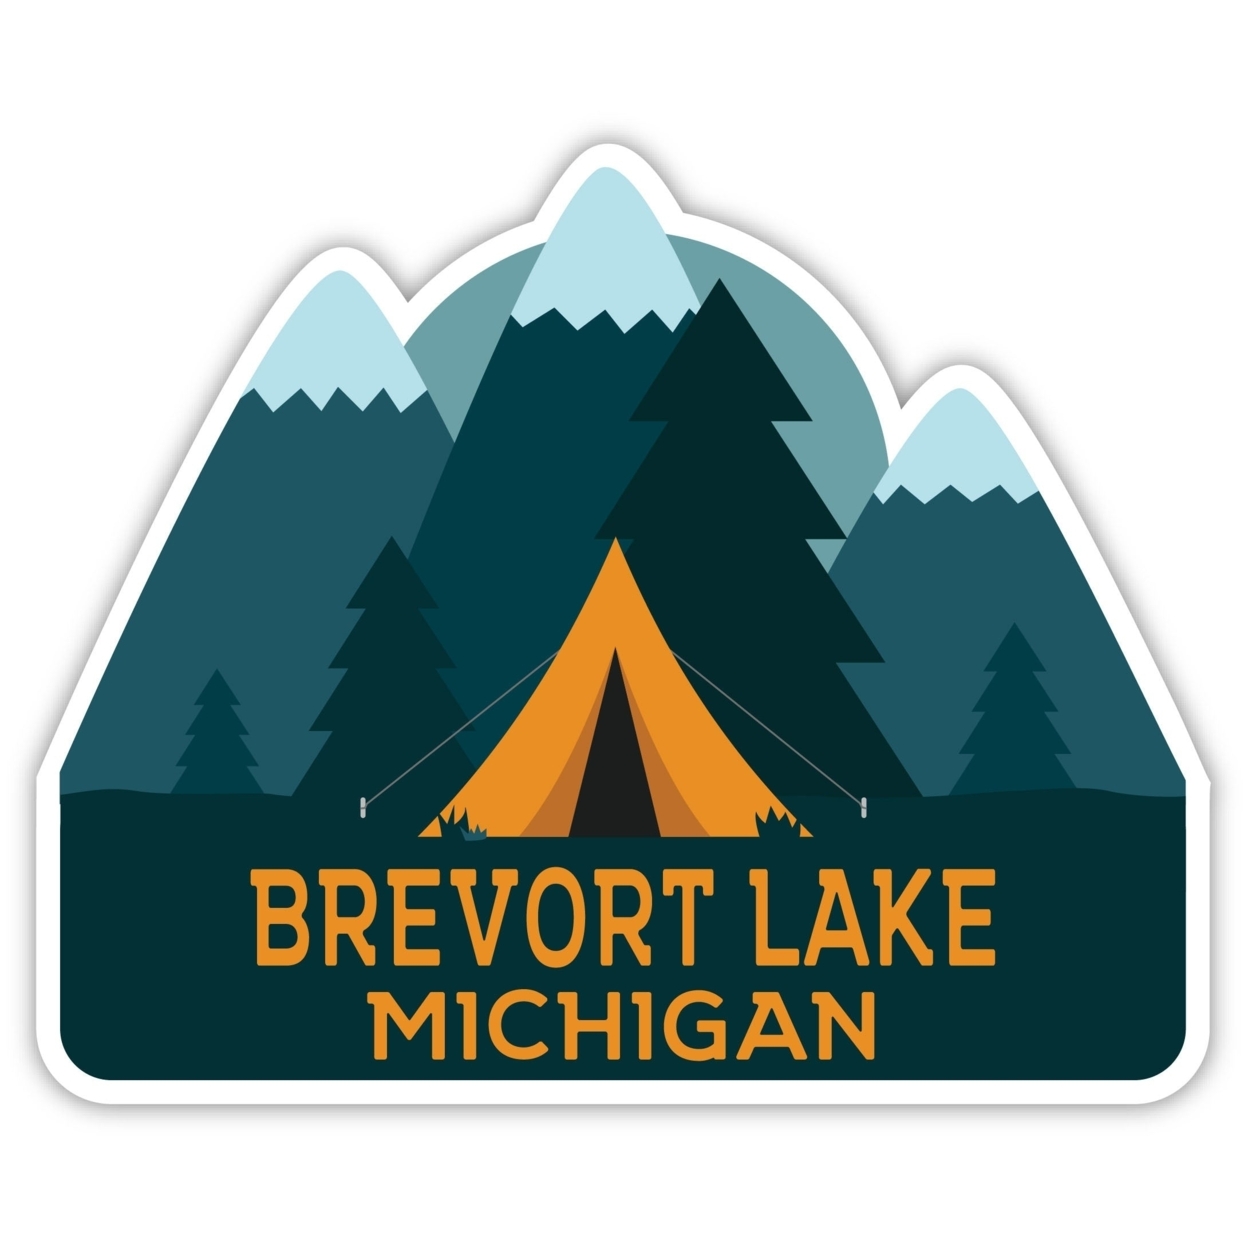 Brevort Lake Michigan Souvenir Decorative Stickers (Choose Theme And Size) - 4-Pack, 4-Inch, Tent